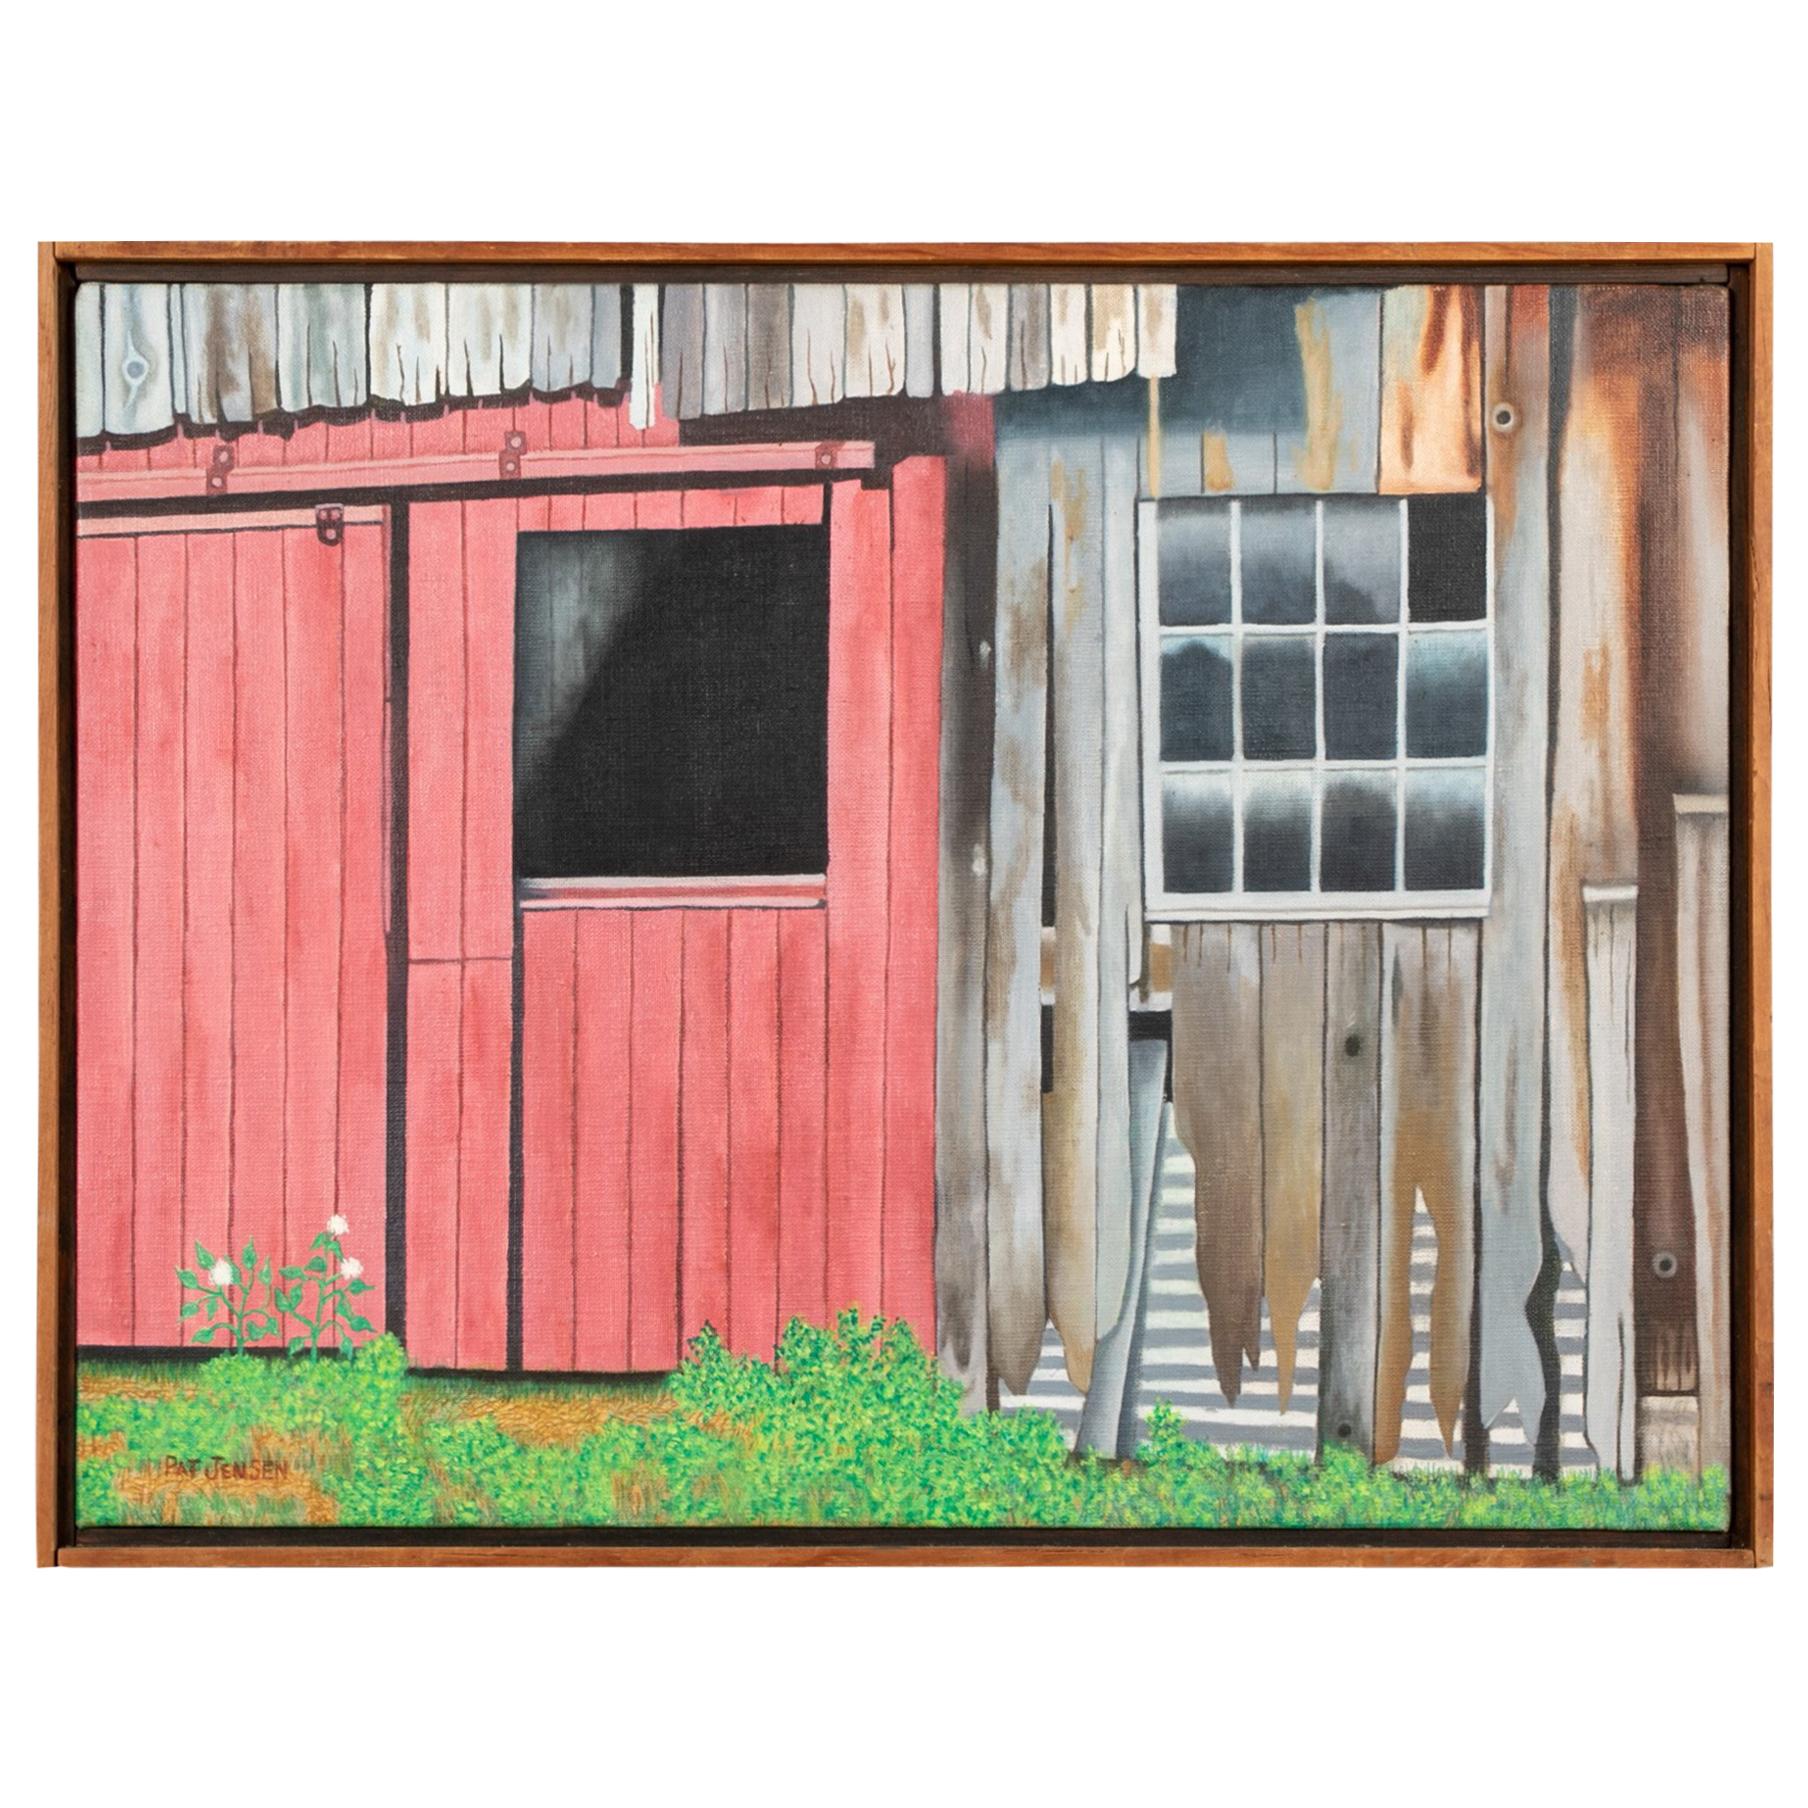 Pat Jensen, Oil on Canvas, "Part of the Barn"